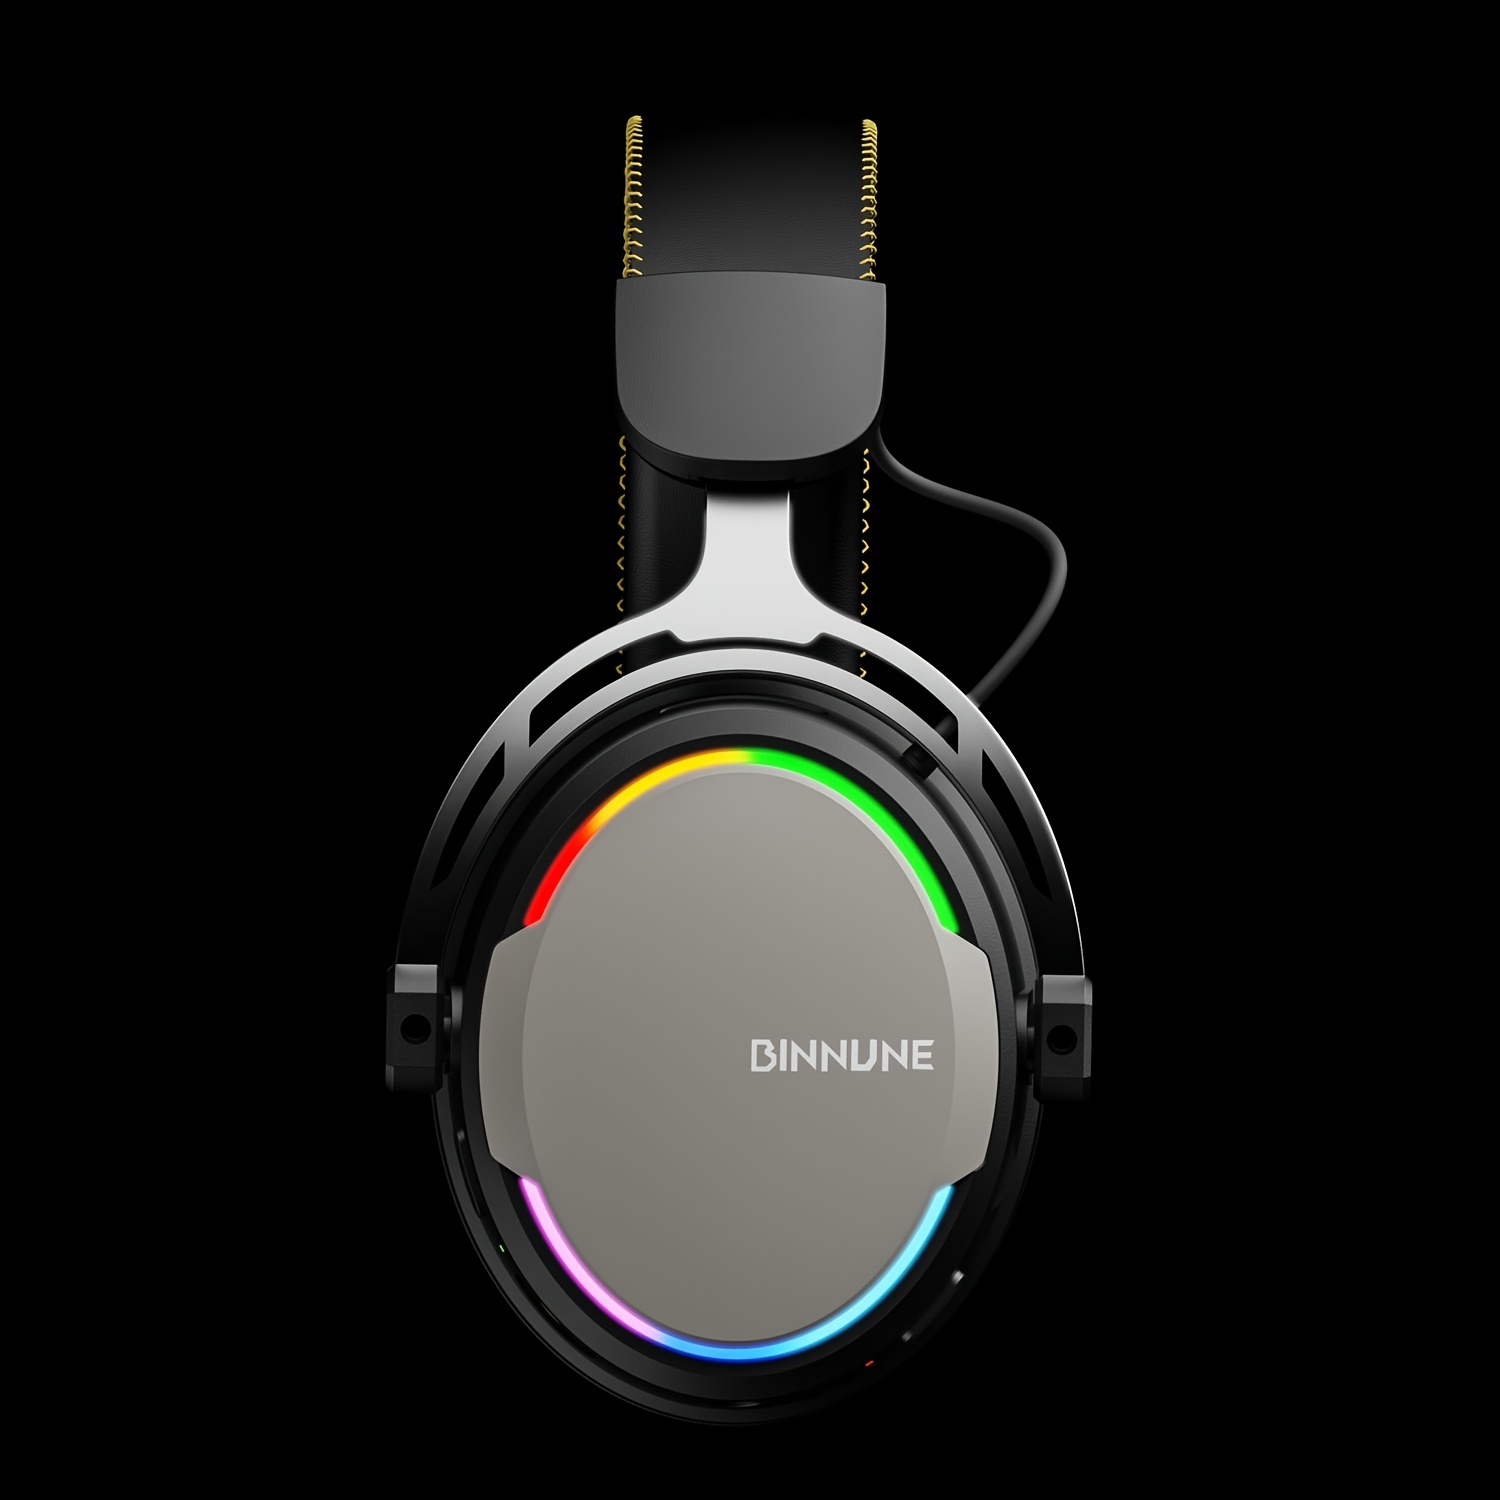 BINNUNE Cascos Inalambricos Gaming Auriculares Bluetooth con Micro